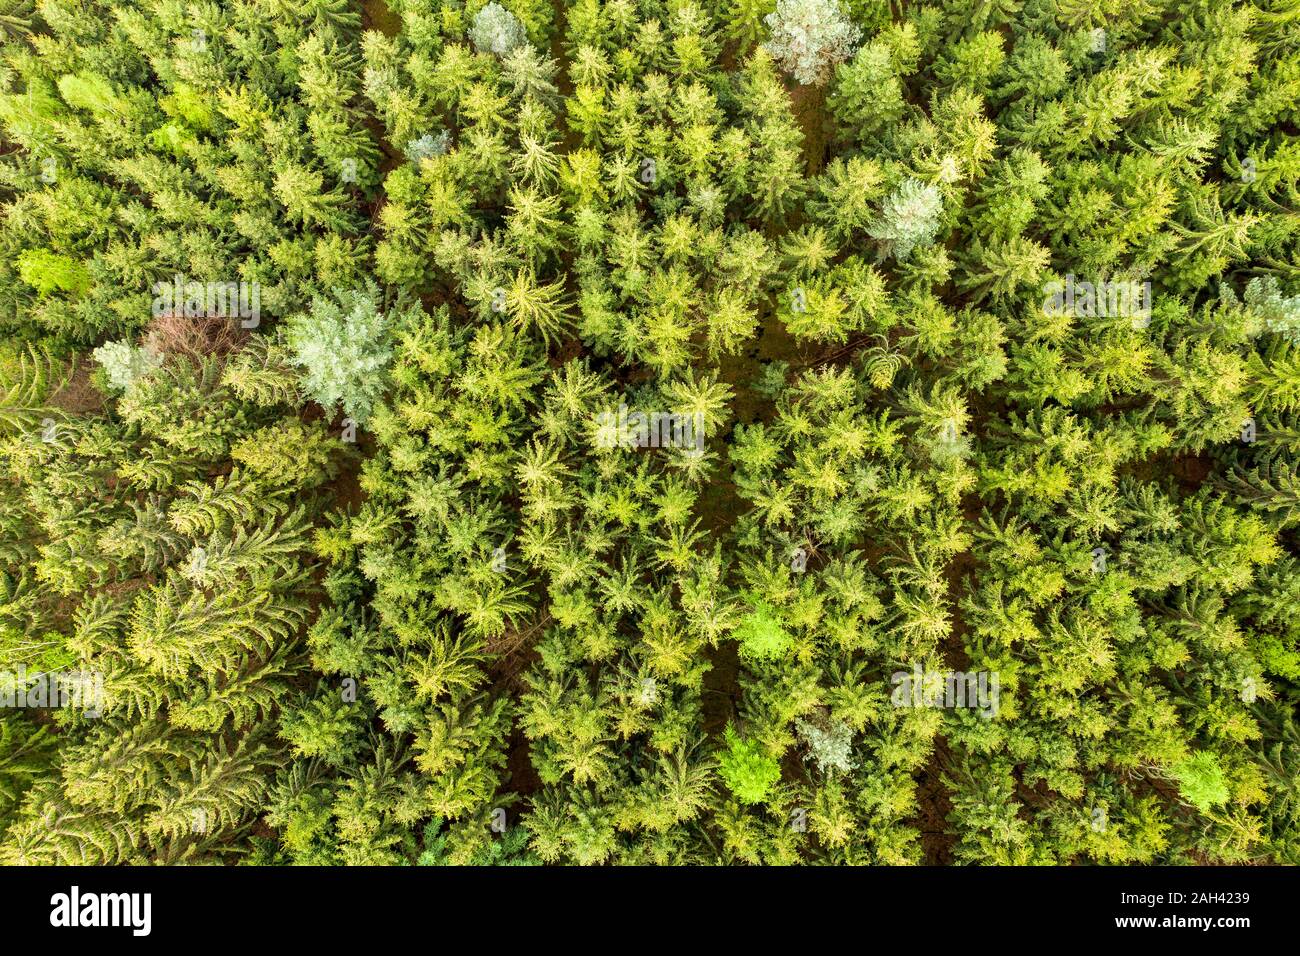 Germania, Hesse, vista aerea di verde lussureggiante foresta mista in montagne di Odenwald Foto Stock